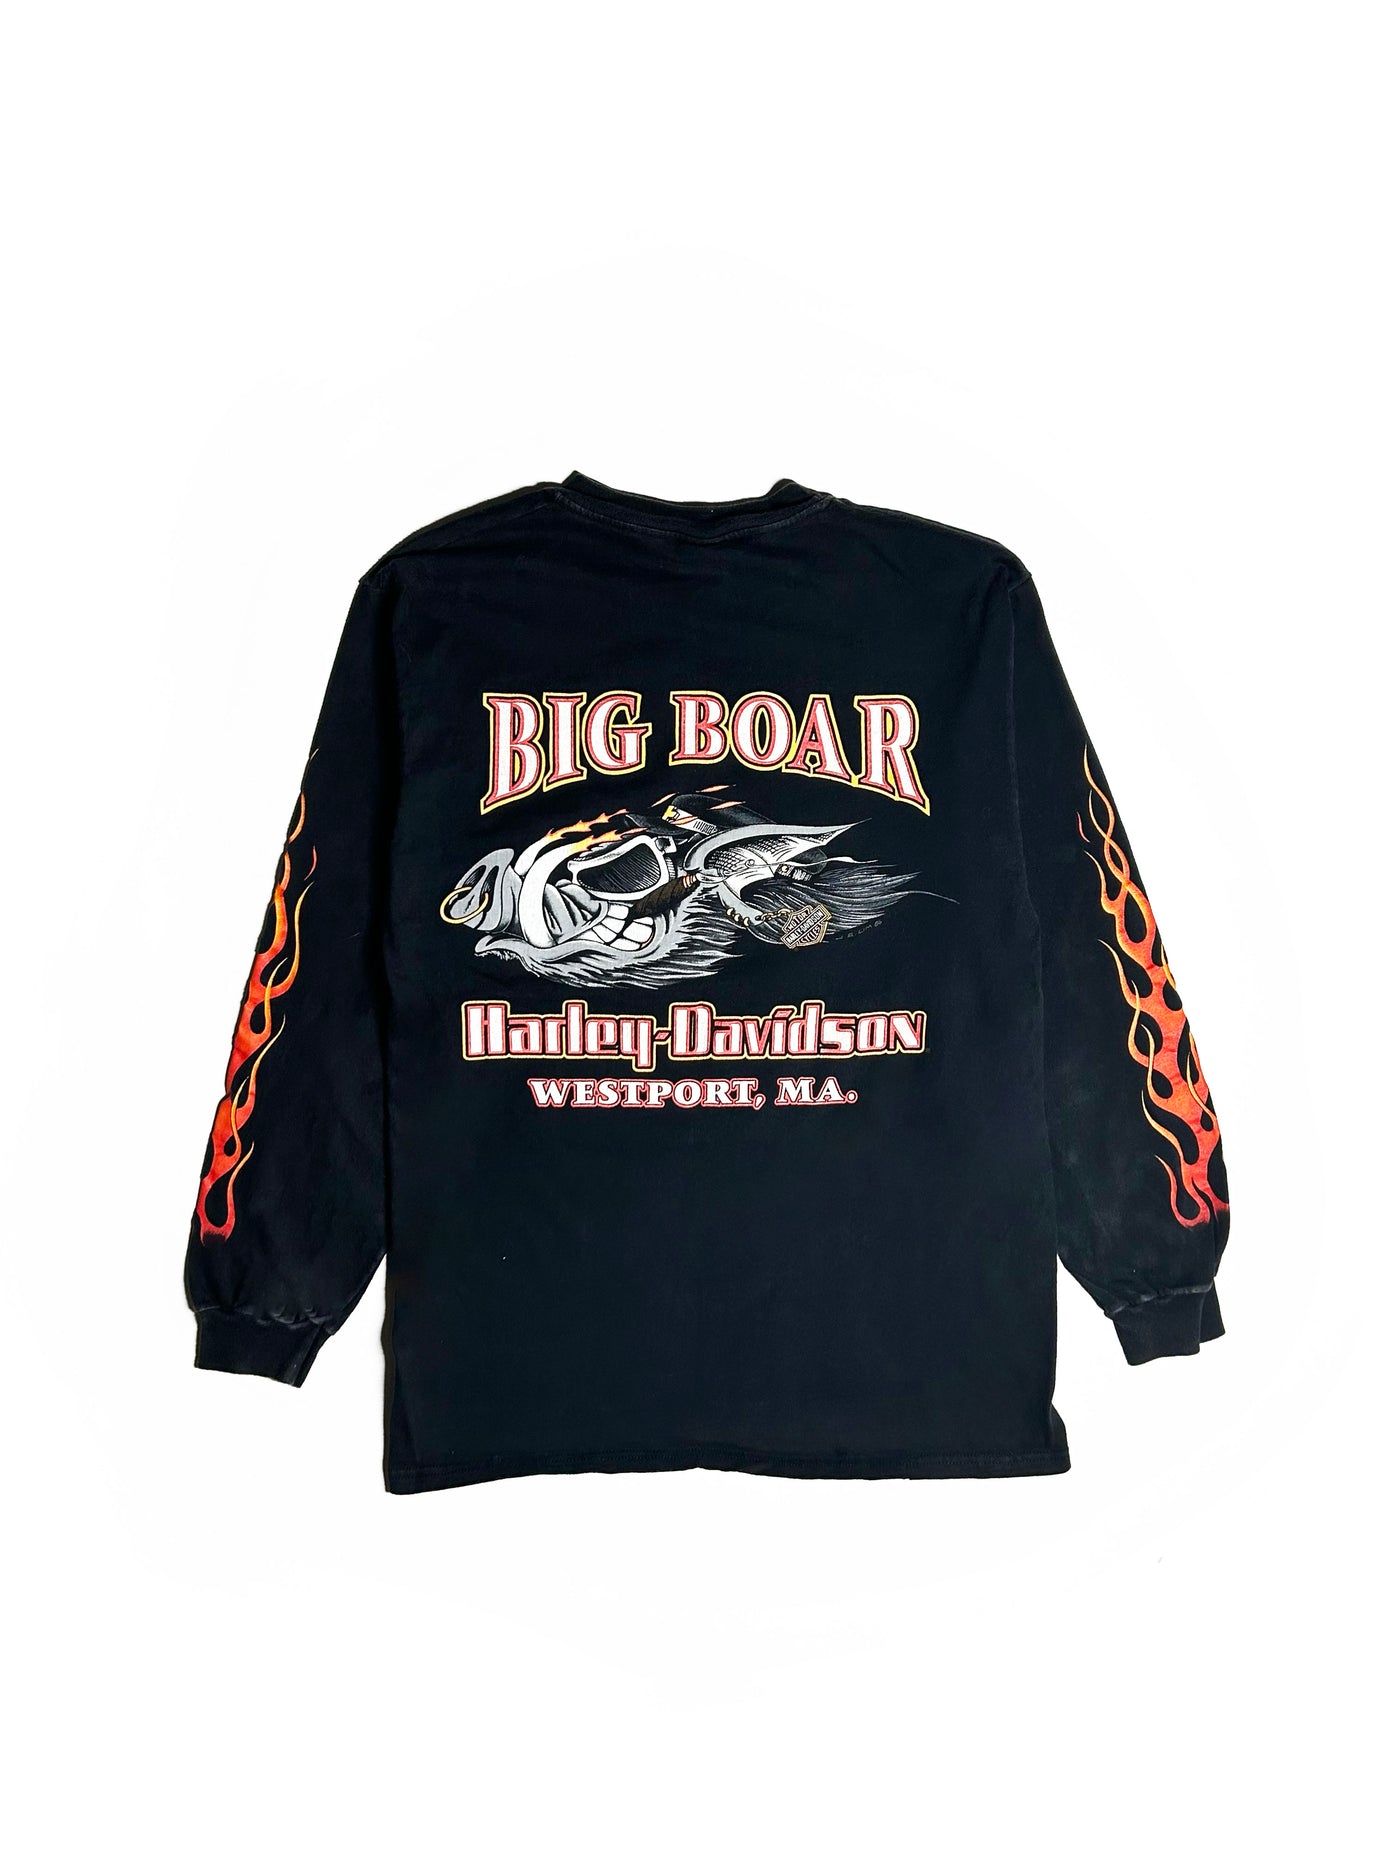 Vintage 1998 Big Boar Harley Davidson Longsleeve Shirt